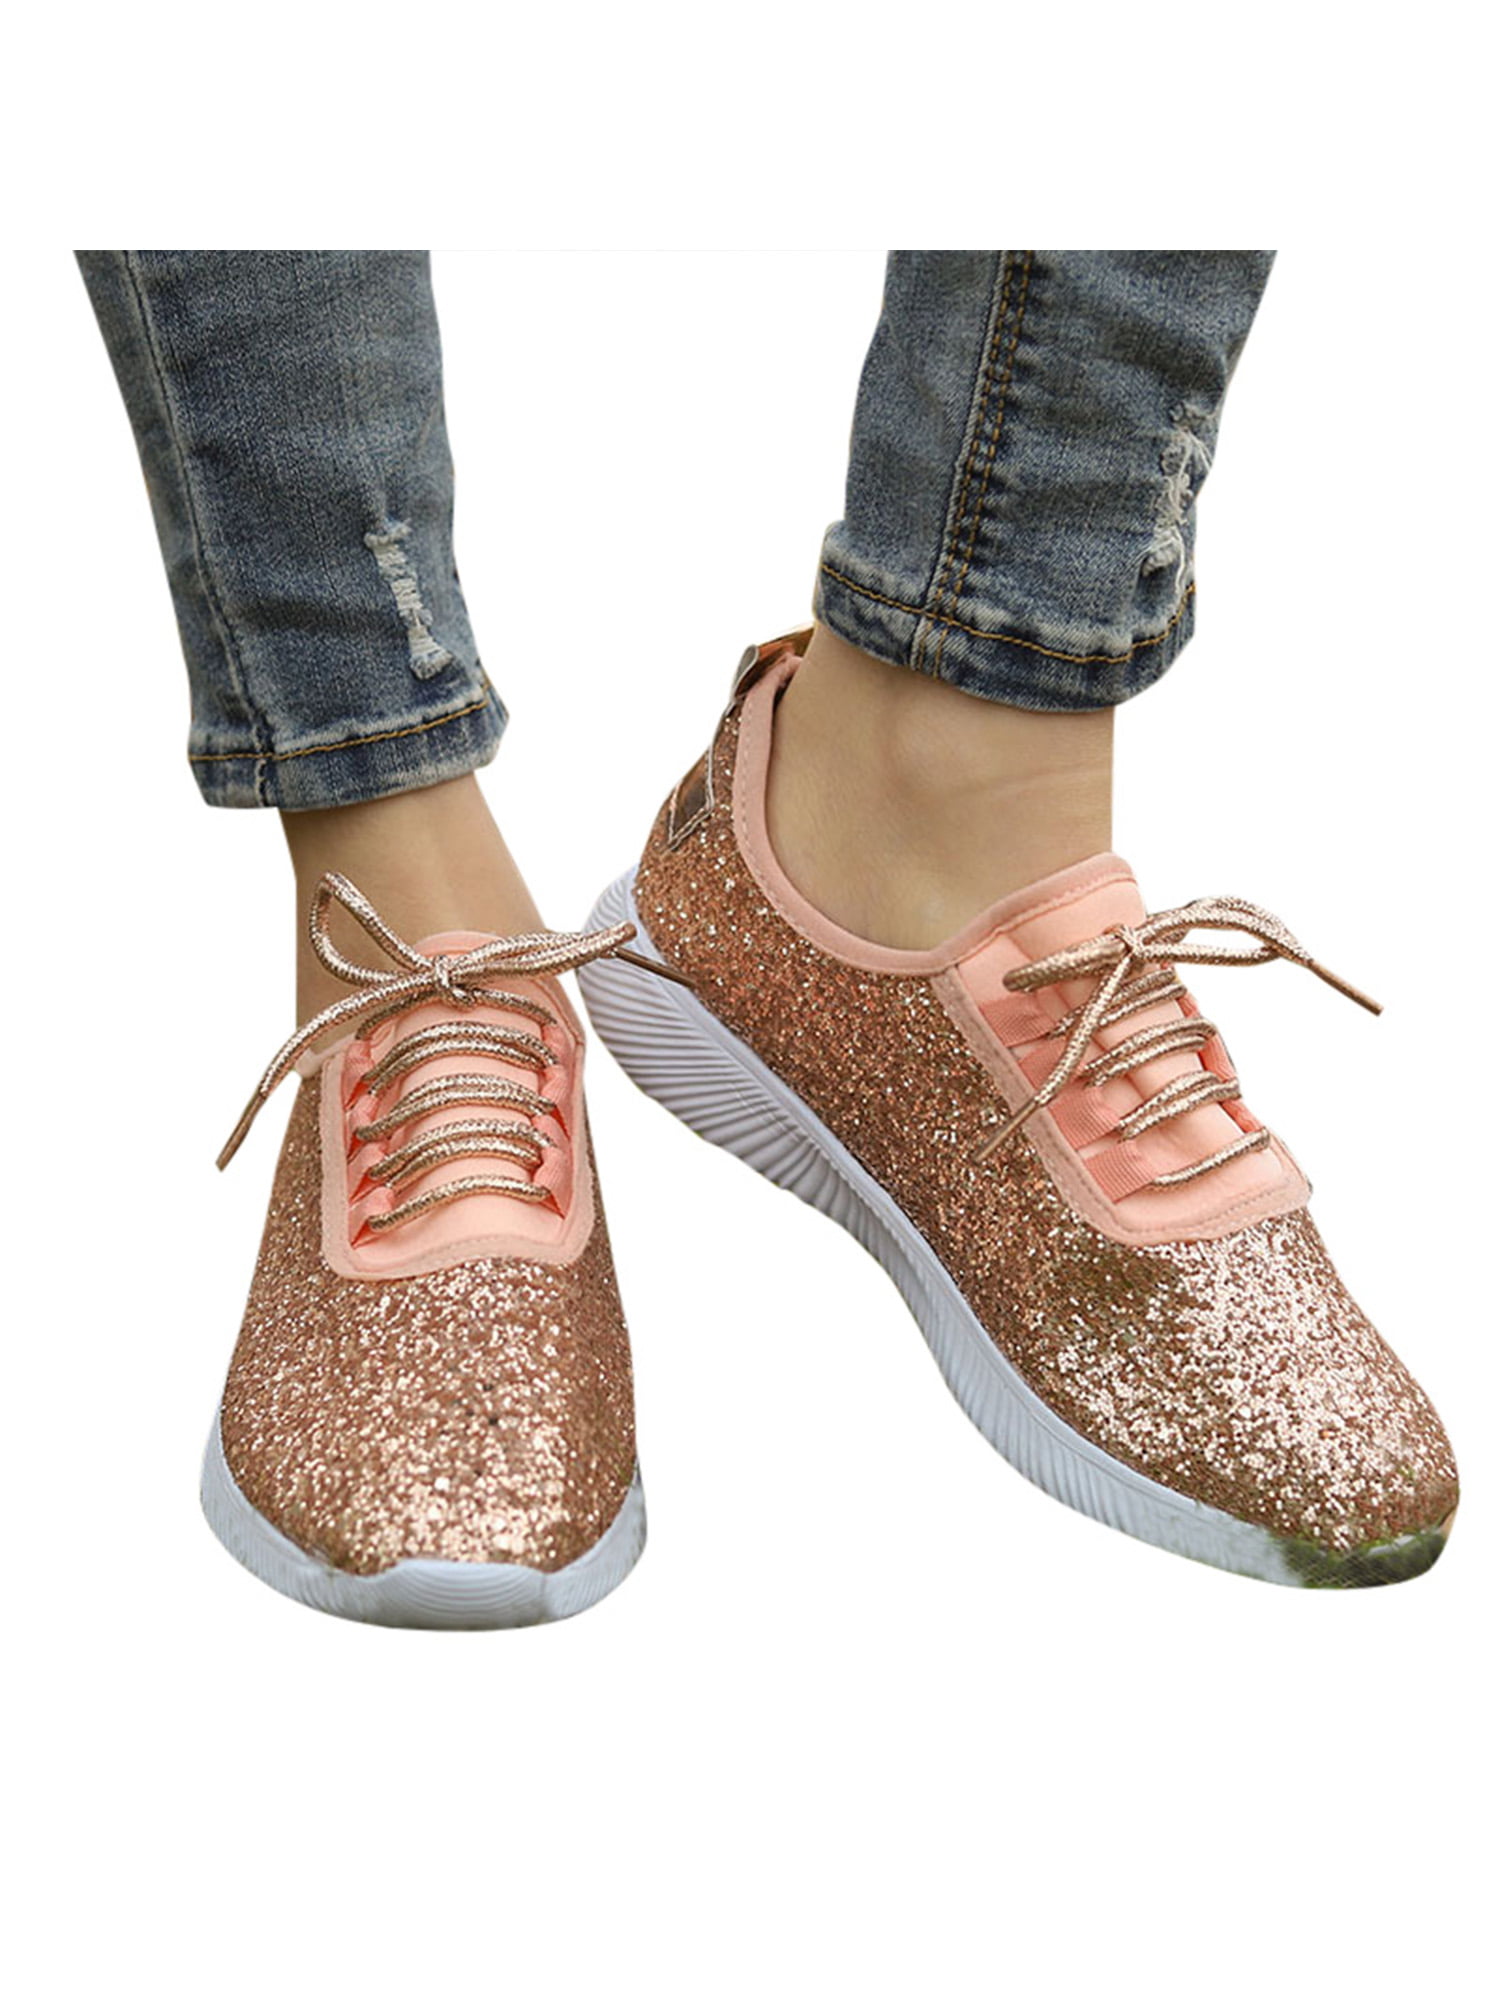 Women Sequin Glitter Sneakers Tennis Lightweight Comfort Walking Athletic Shoes